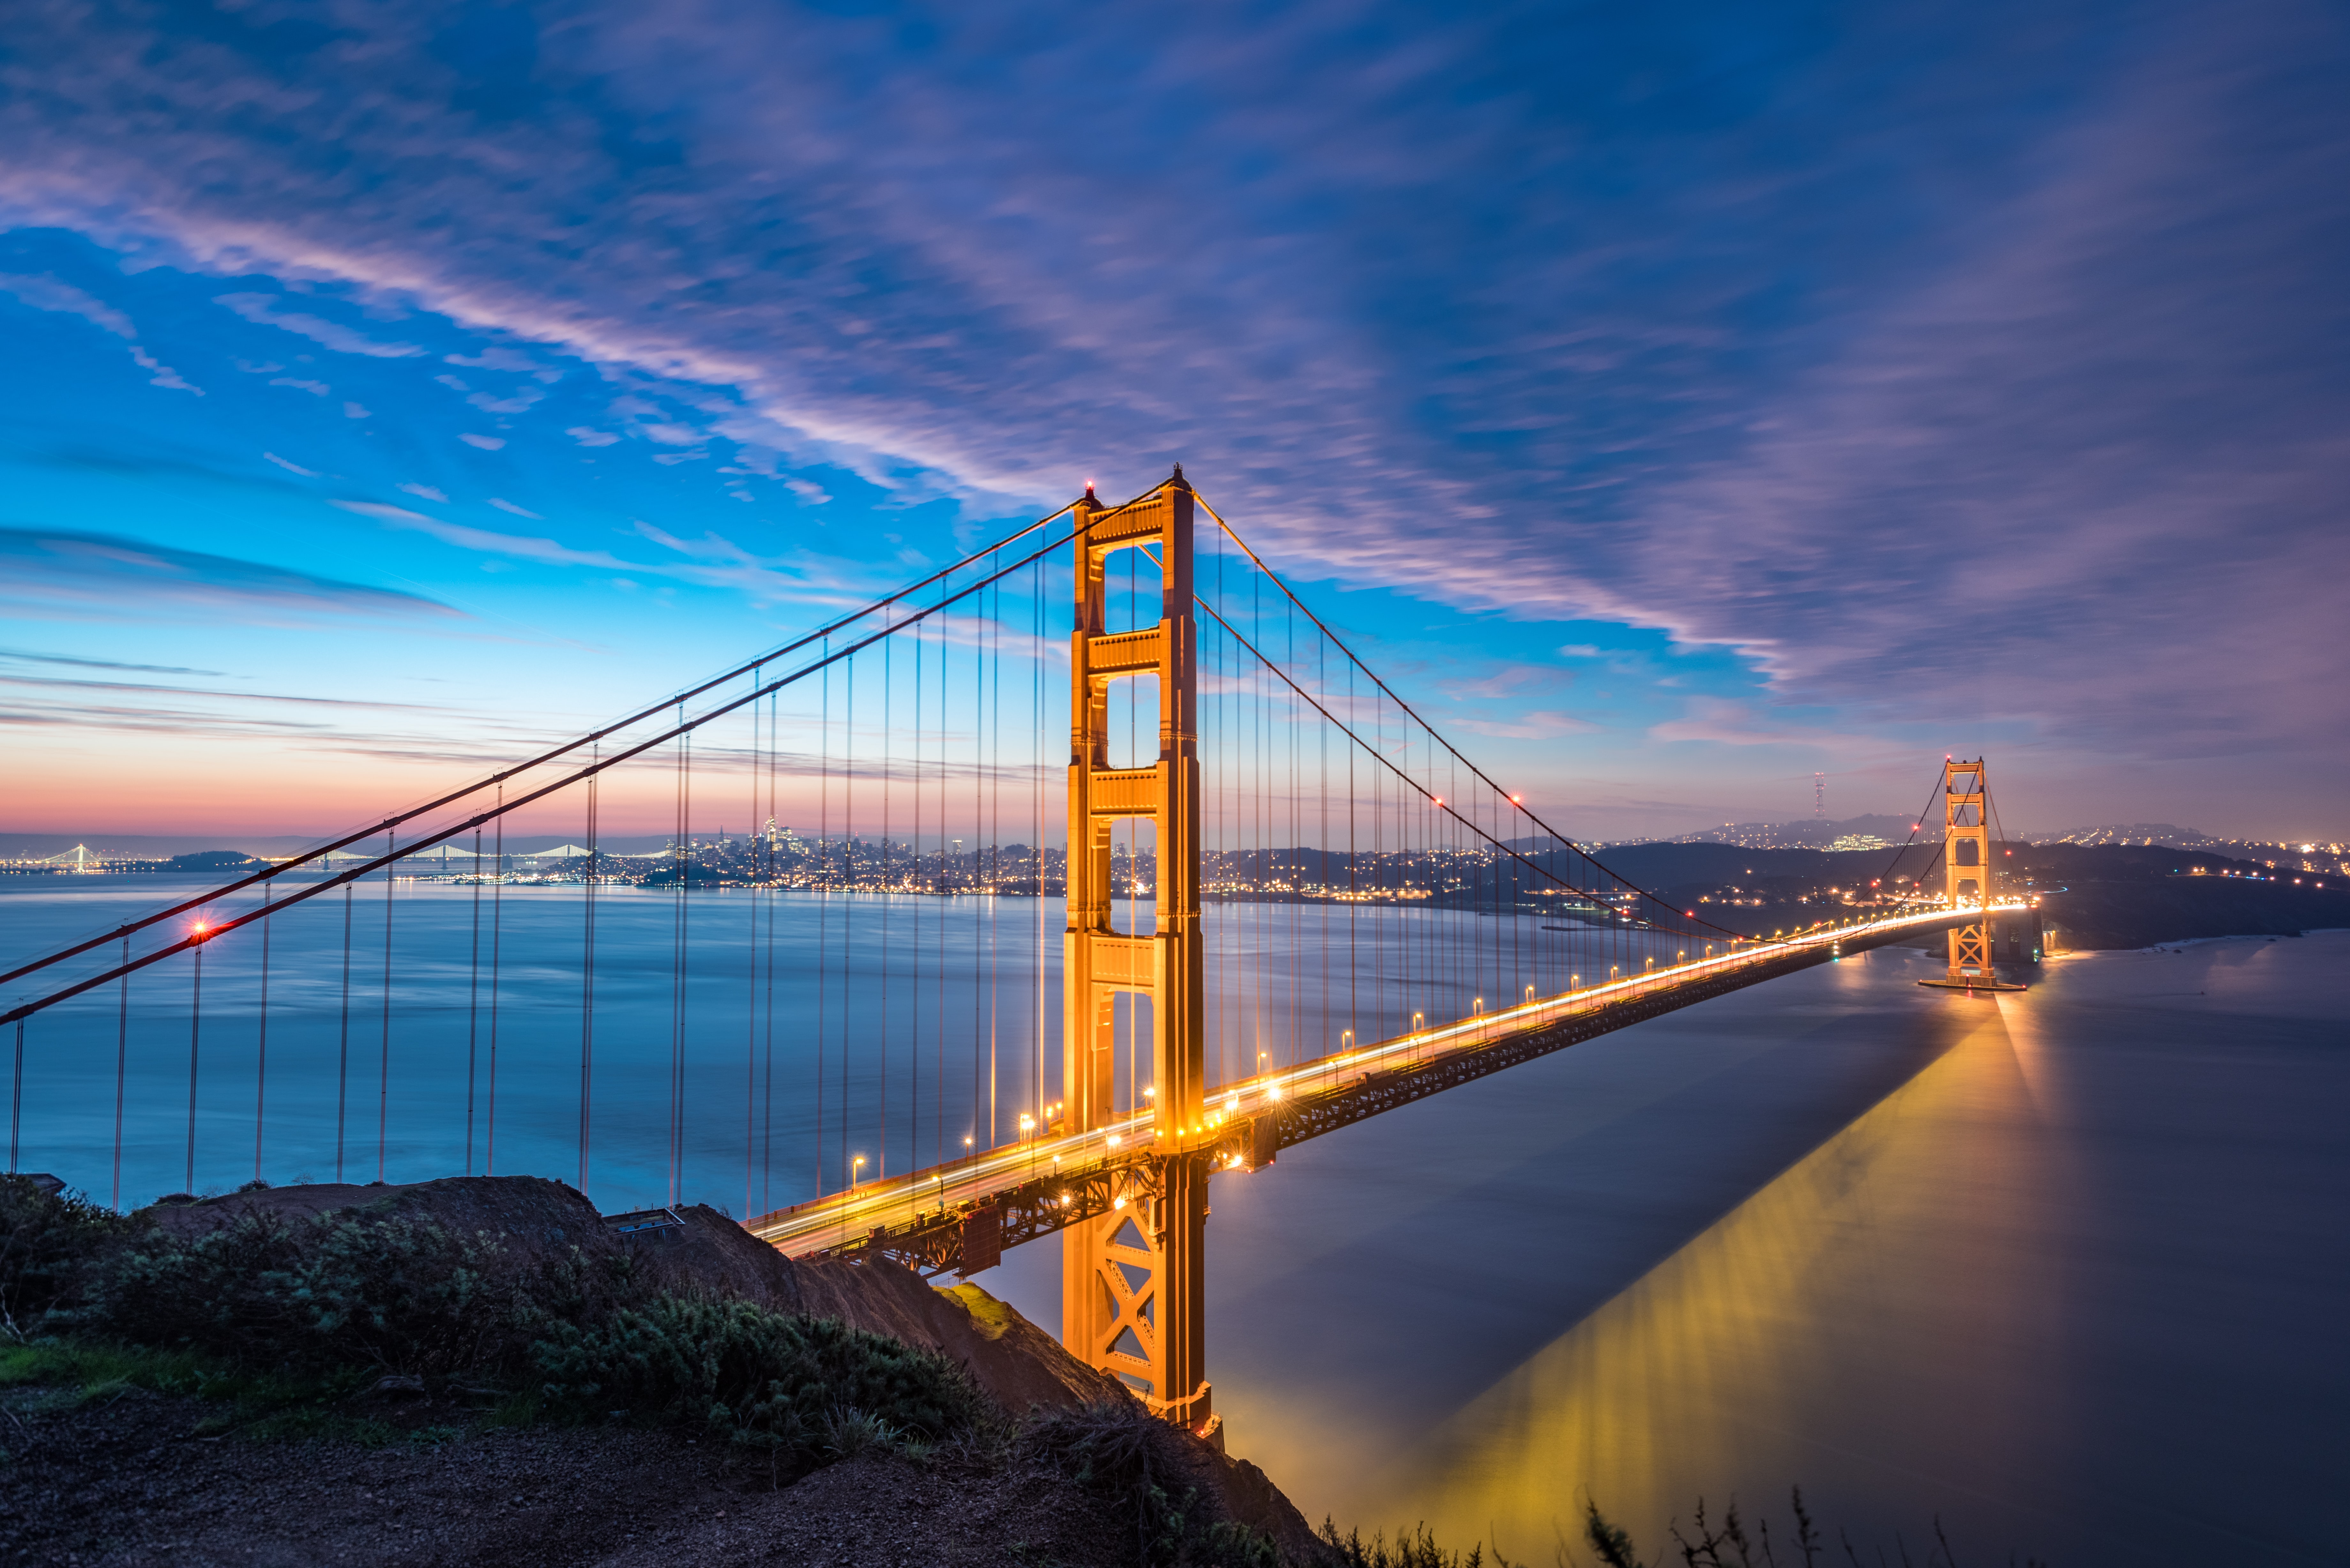 The Golden Gate Bridge at Sunset